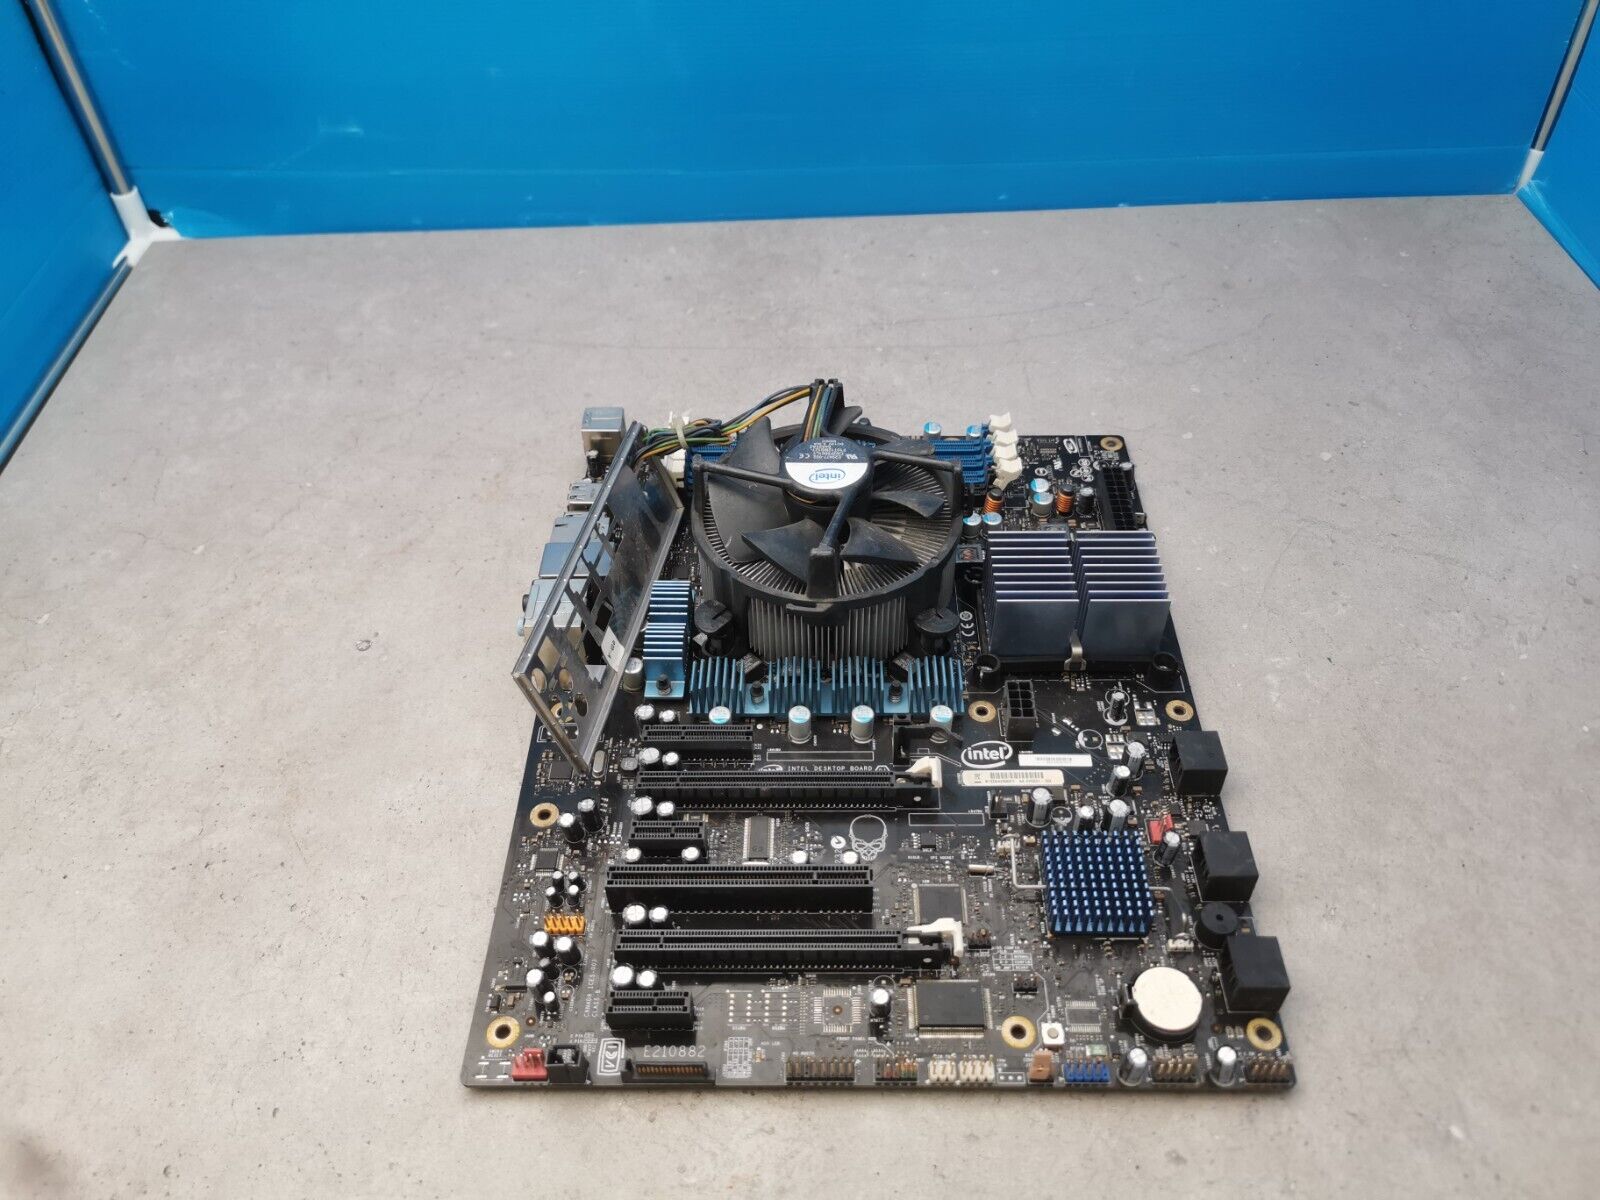 Intel DX58SO Intel LGA 1366 X58 ATX Motherboard + CPU